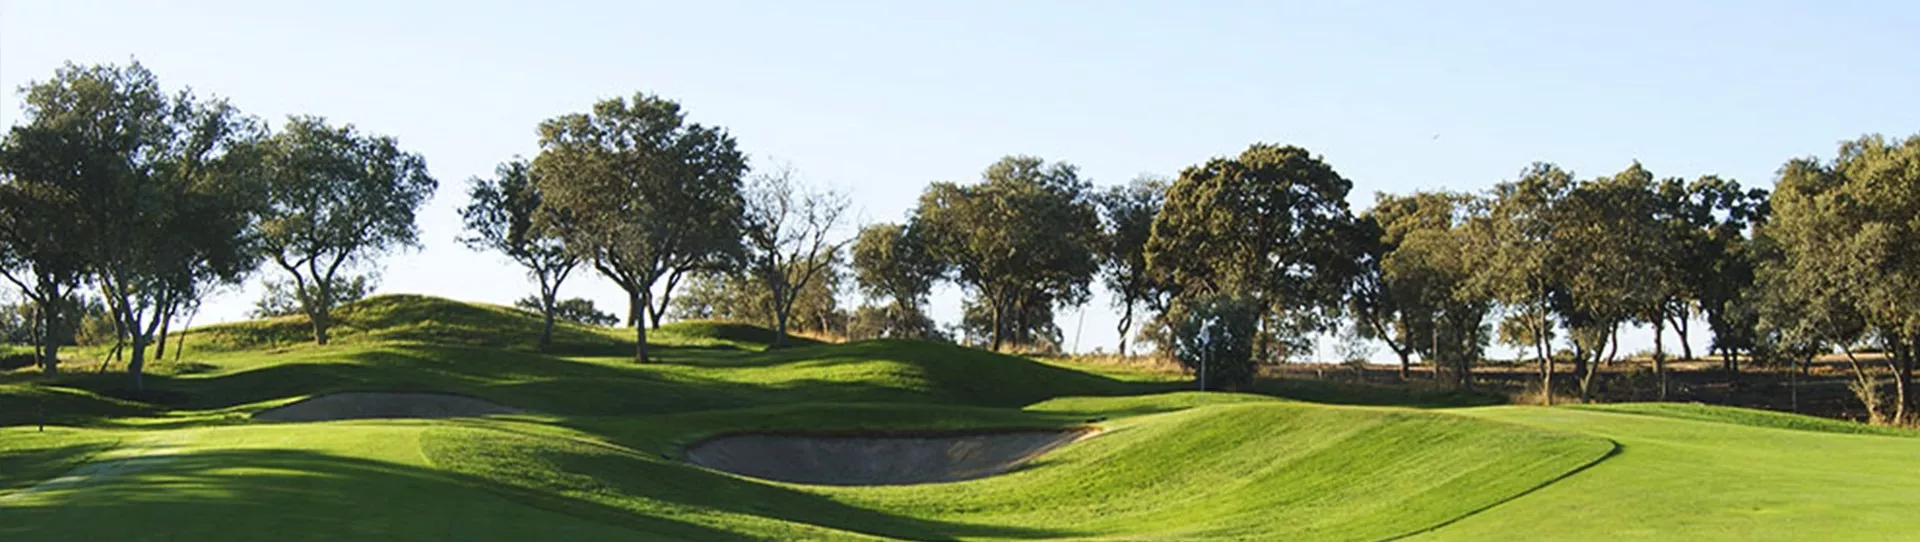 Spain golf courses - Real Club Pineda de Sevilla - Photo 3